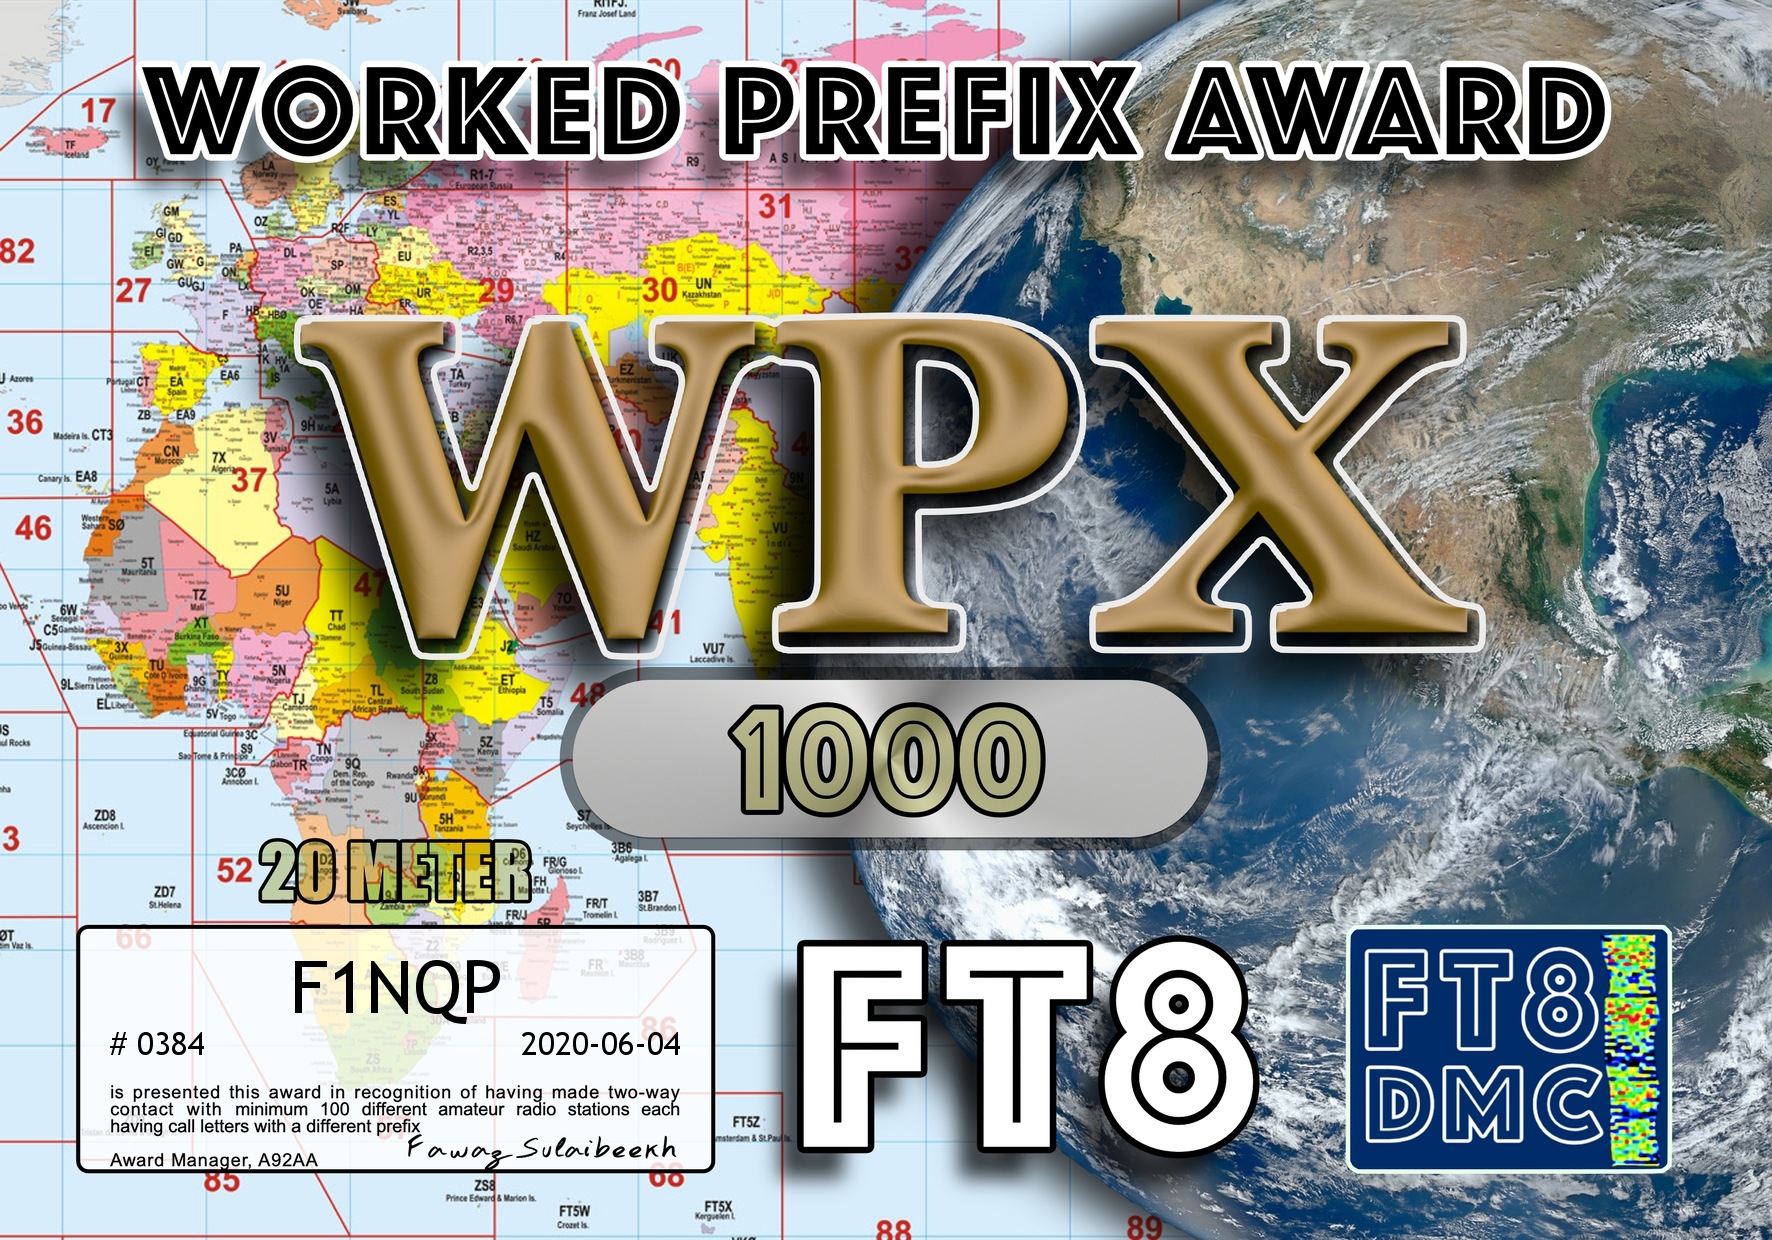 F1NQP-WPX20-1000_FT8DMC.jpg